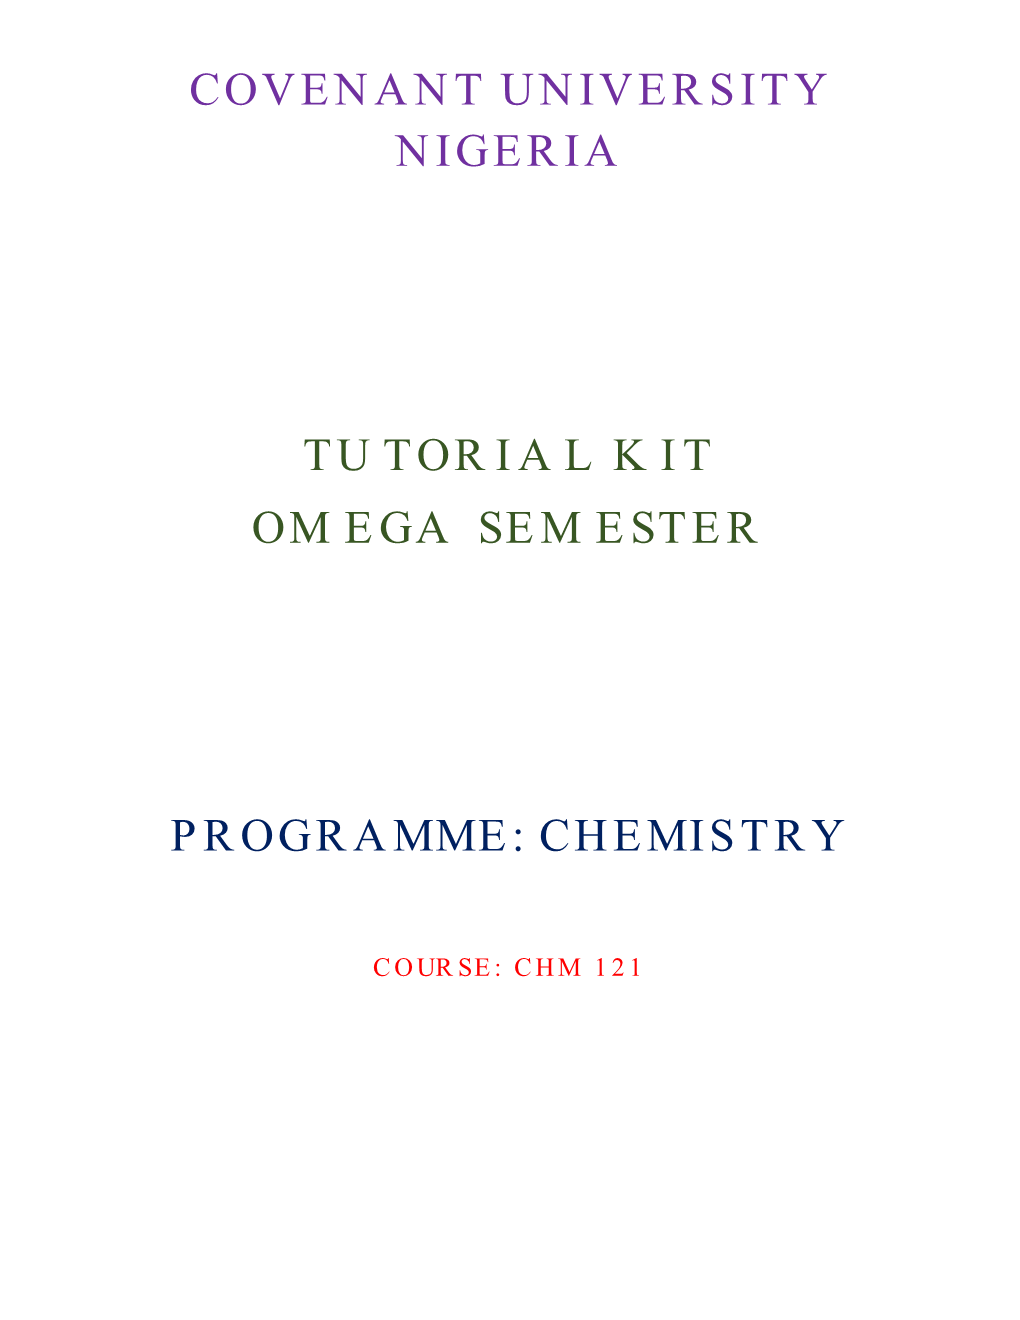 Tutorial Kit Omega Semester